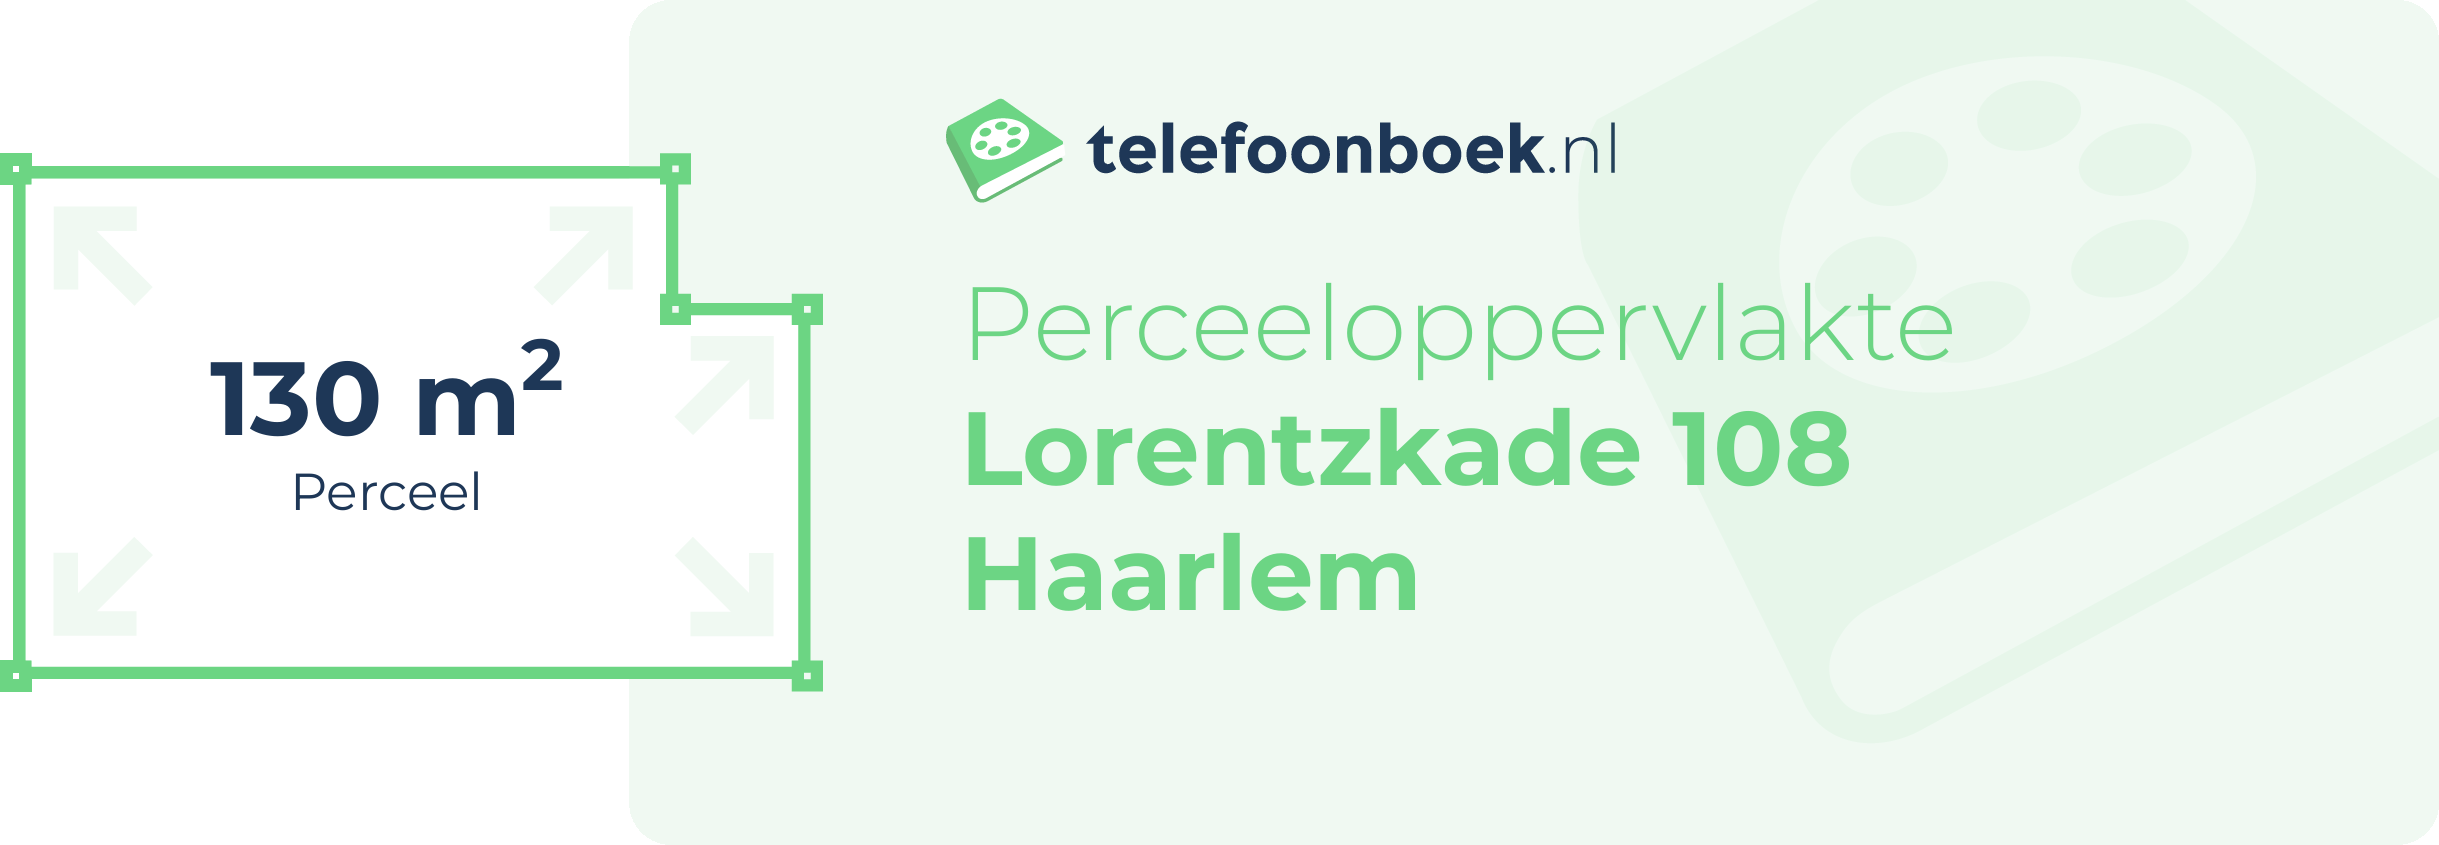 Perceeloppervlakte Lorentzkade 108 Haarlem